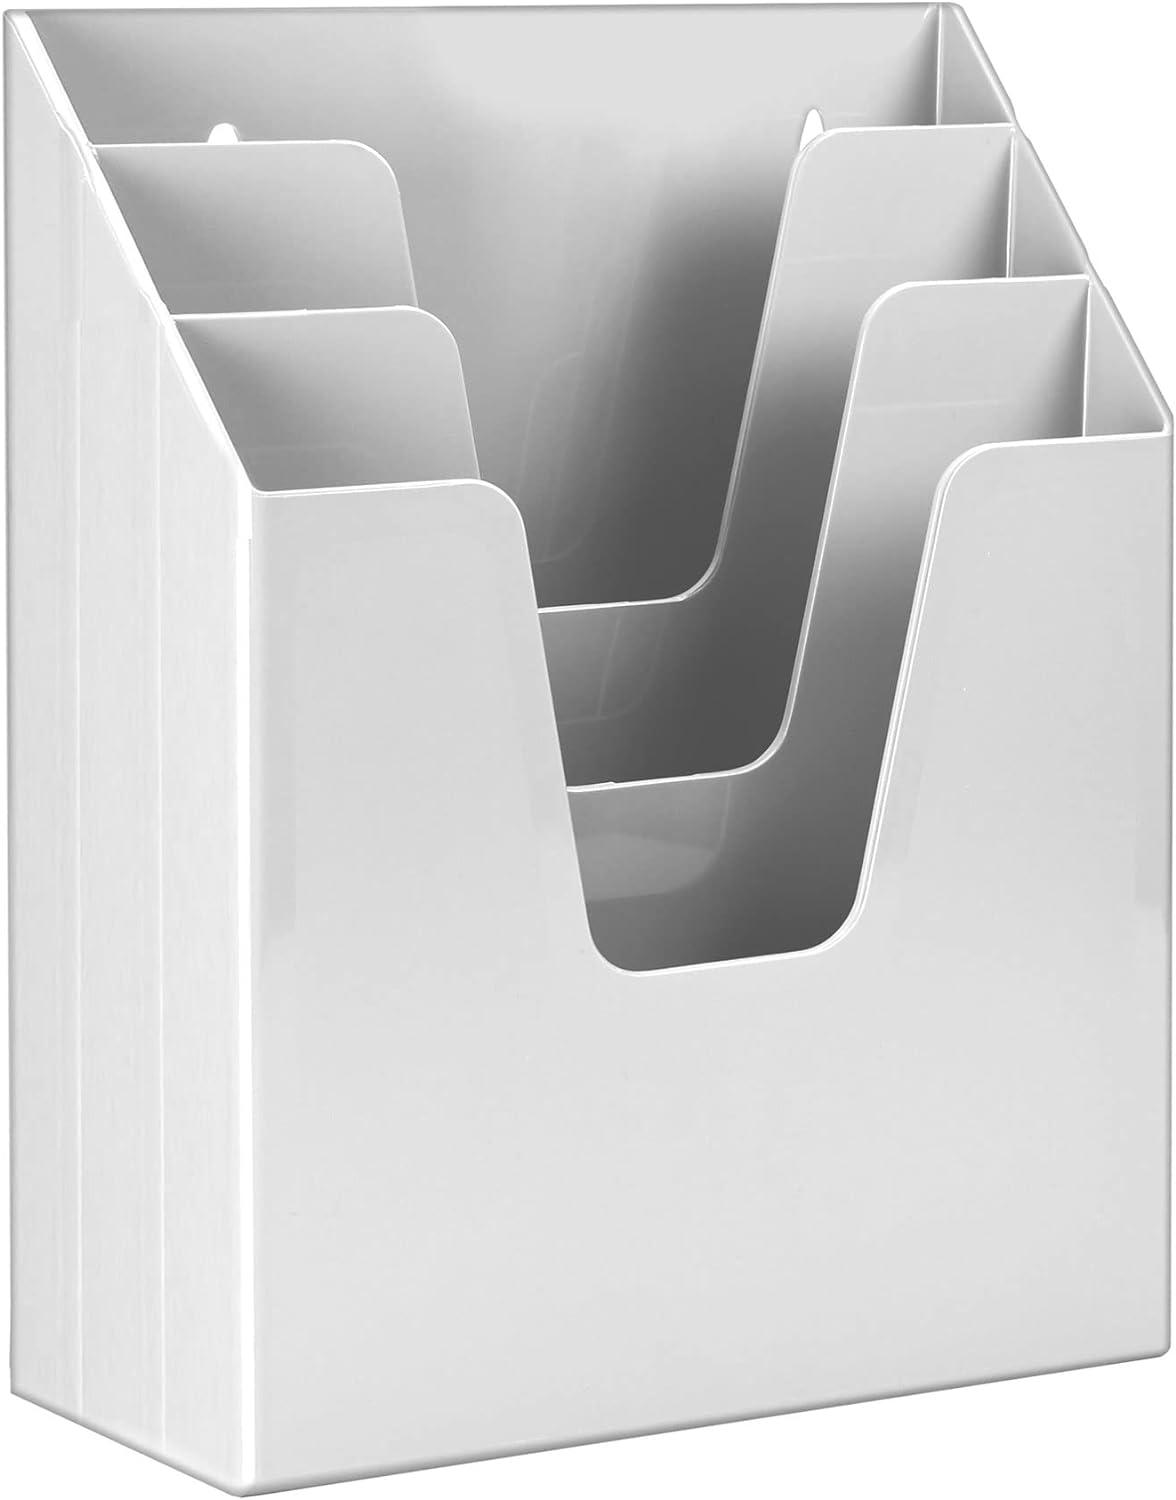 acrimet vertical triple file folder holder organizer white color  acrimet b06xh5pgy1